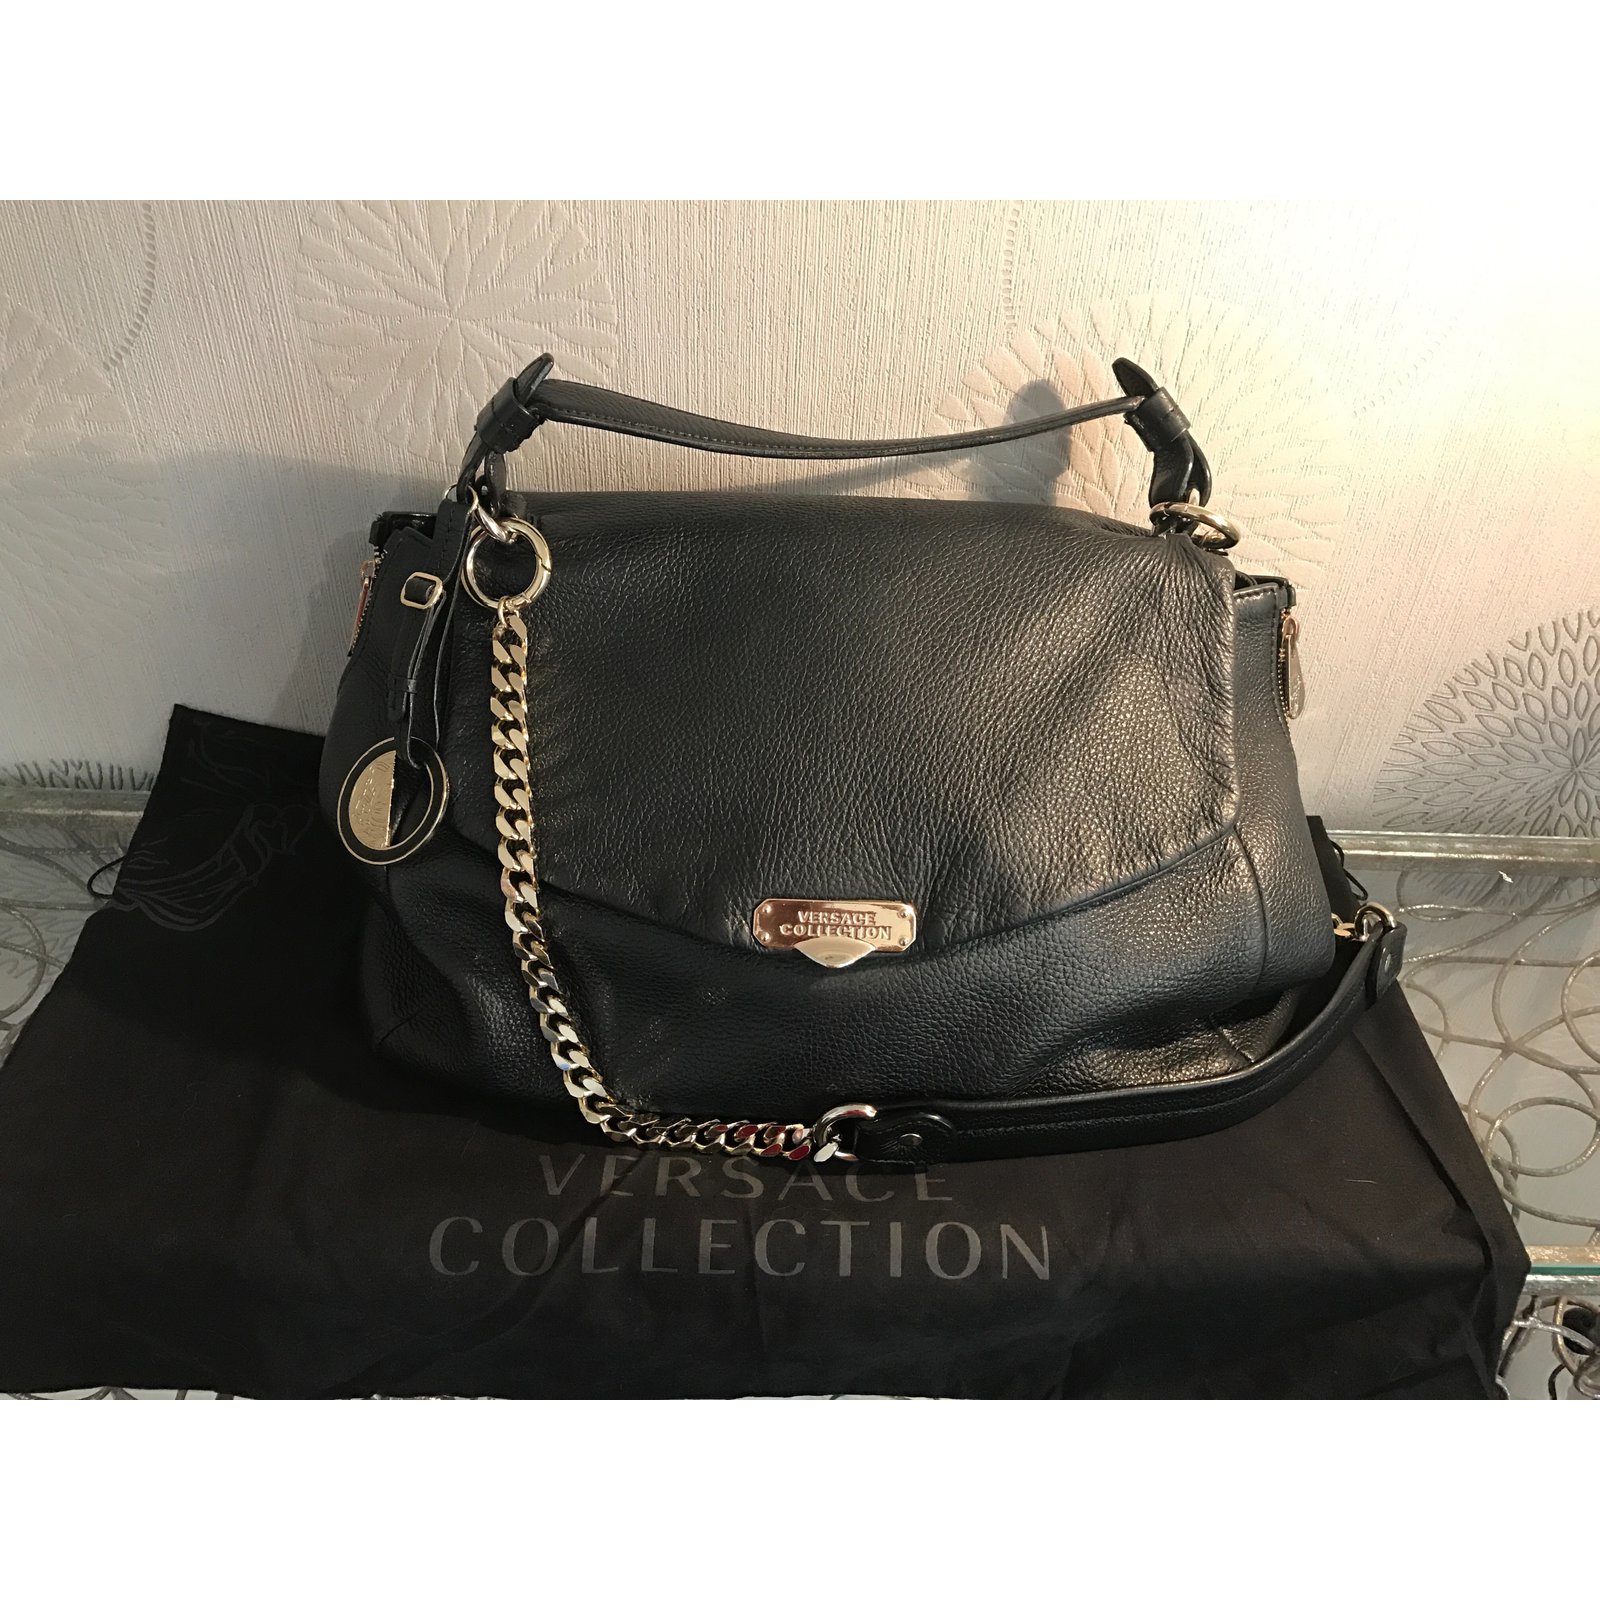 versace collection leather shoulder bag